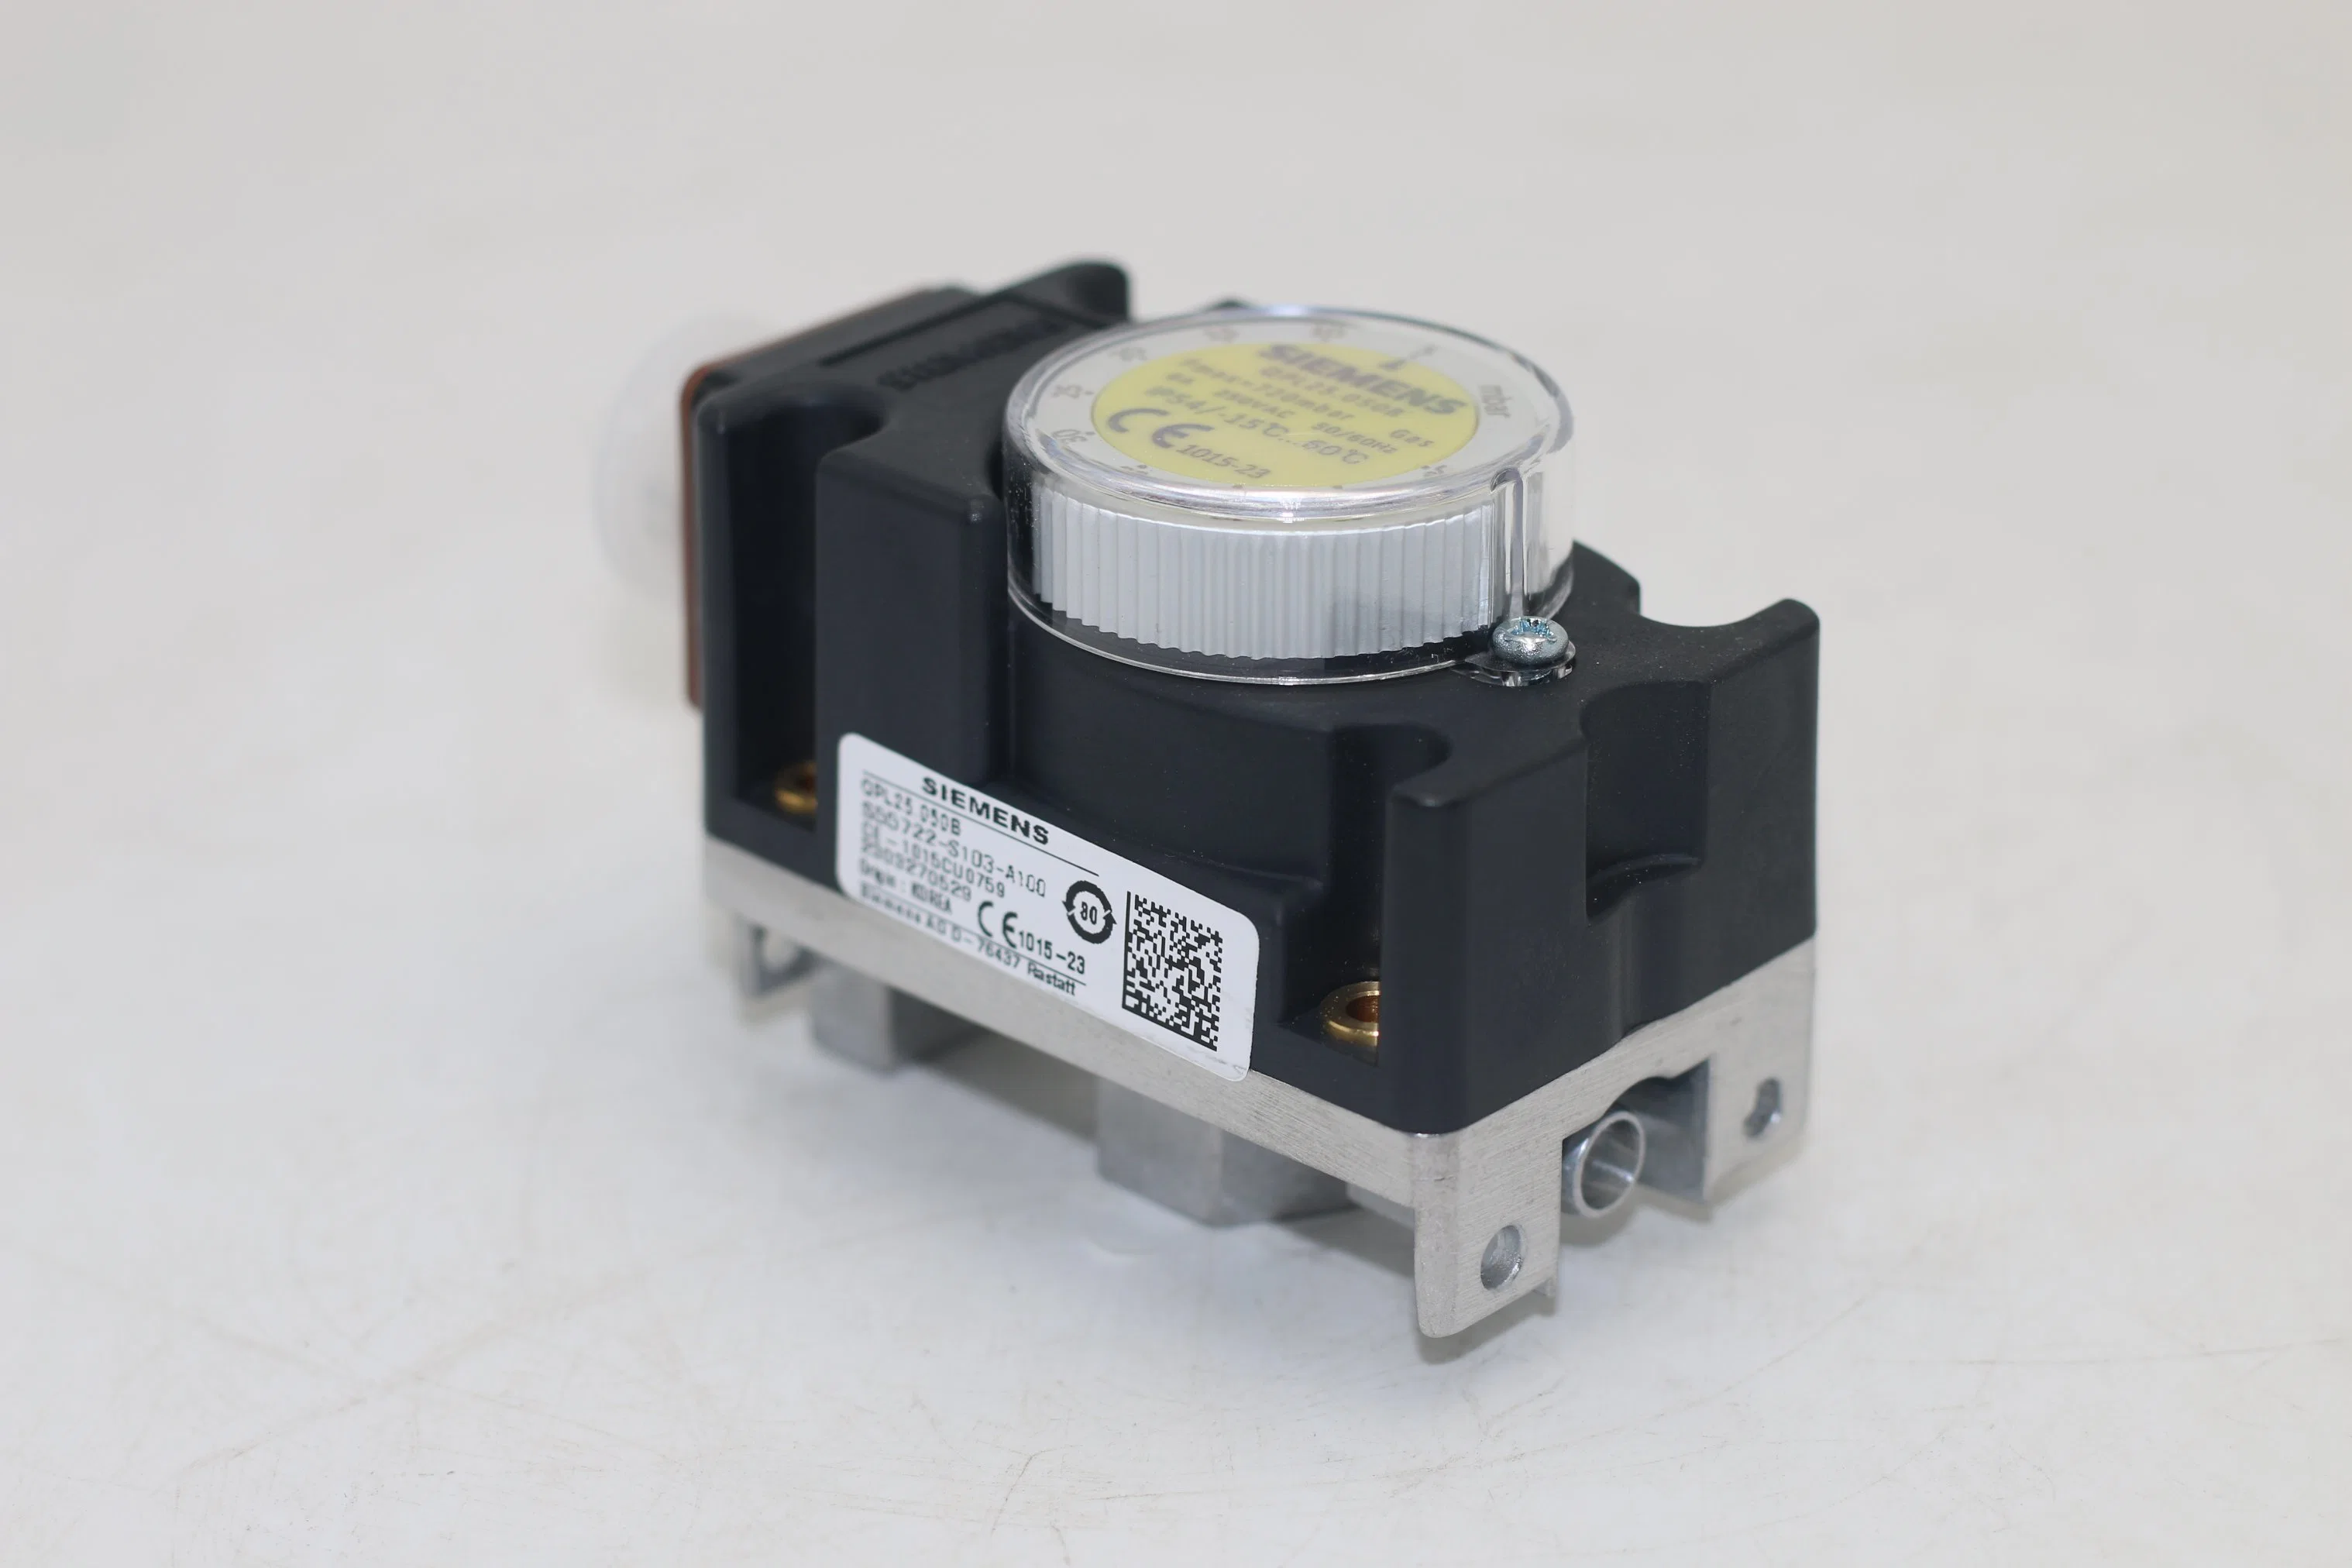 Original Siemens Gas Pressure Control Switch Qpl25.050b Adjustable Pressure Switch for Gas Burner Parts